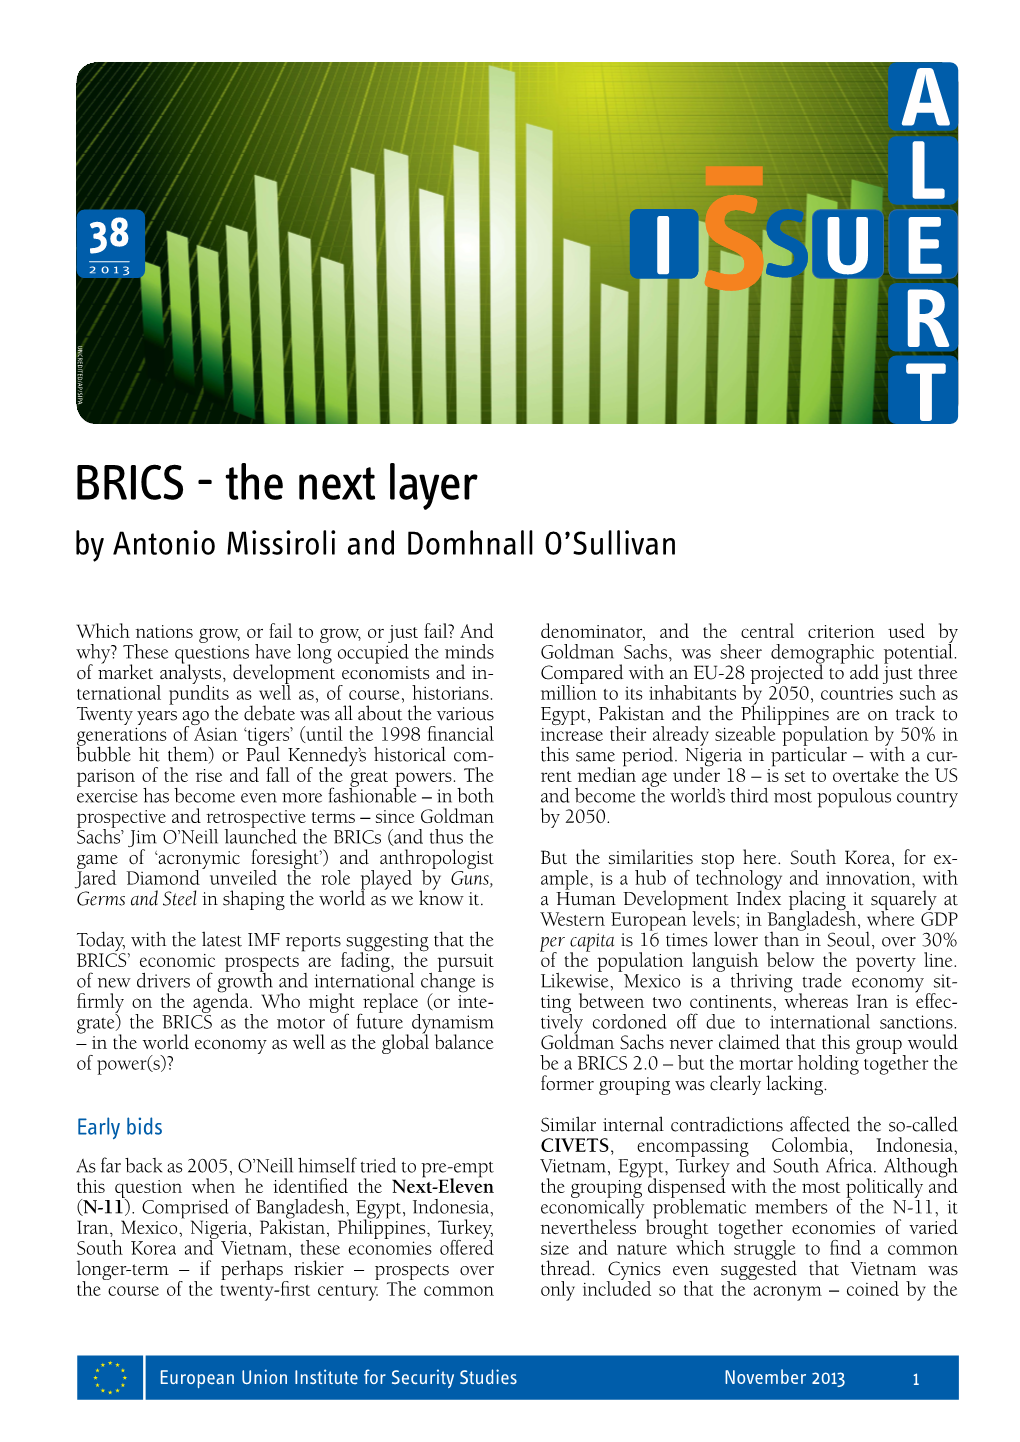 BRICS - the Next Layer by Antonio Missiroli and Domhnall O’Sullivan